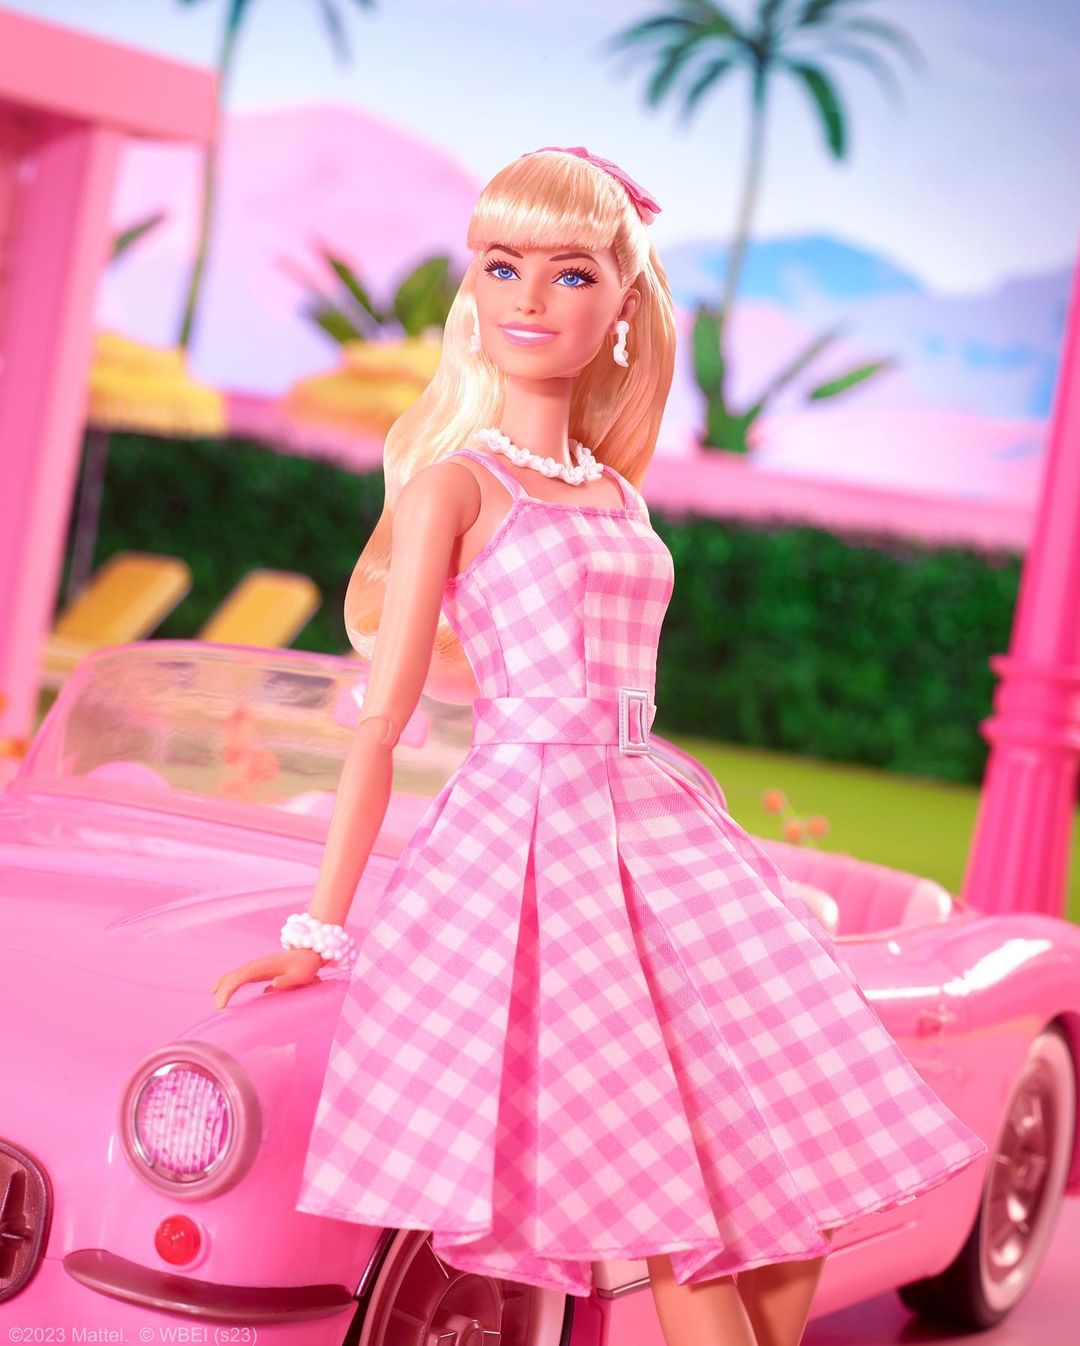 Dressing Barbie: Meet the designer who created a miniature fashion icon